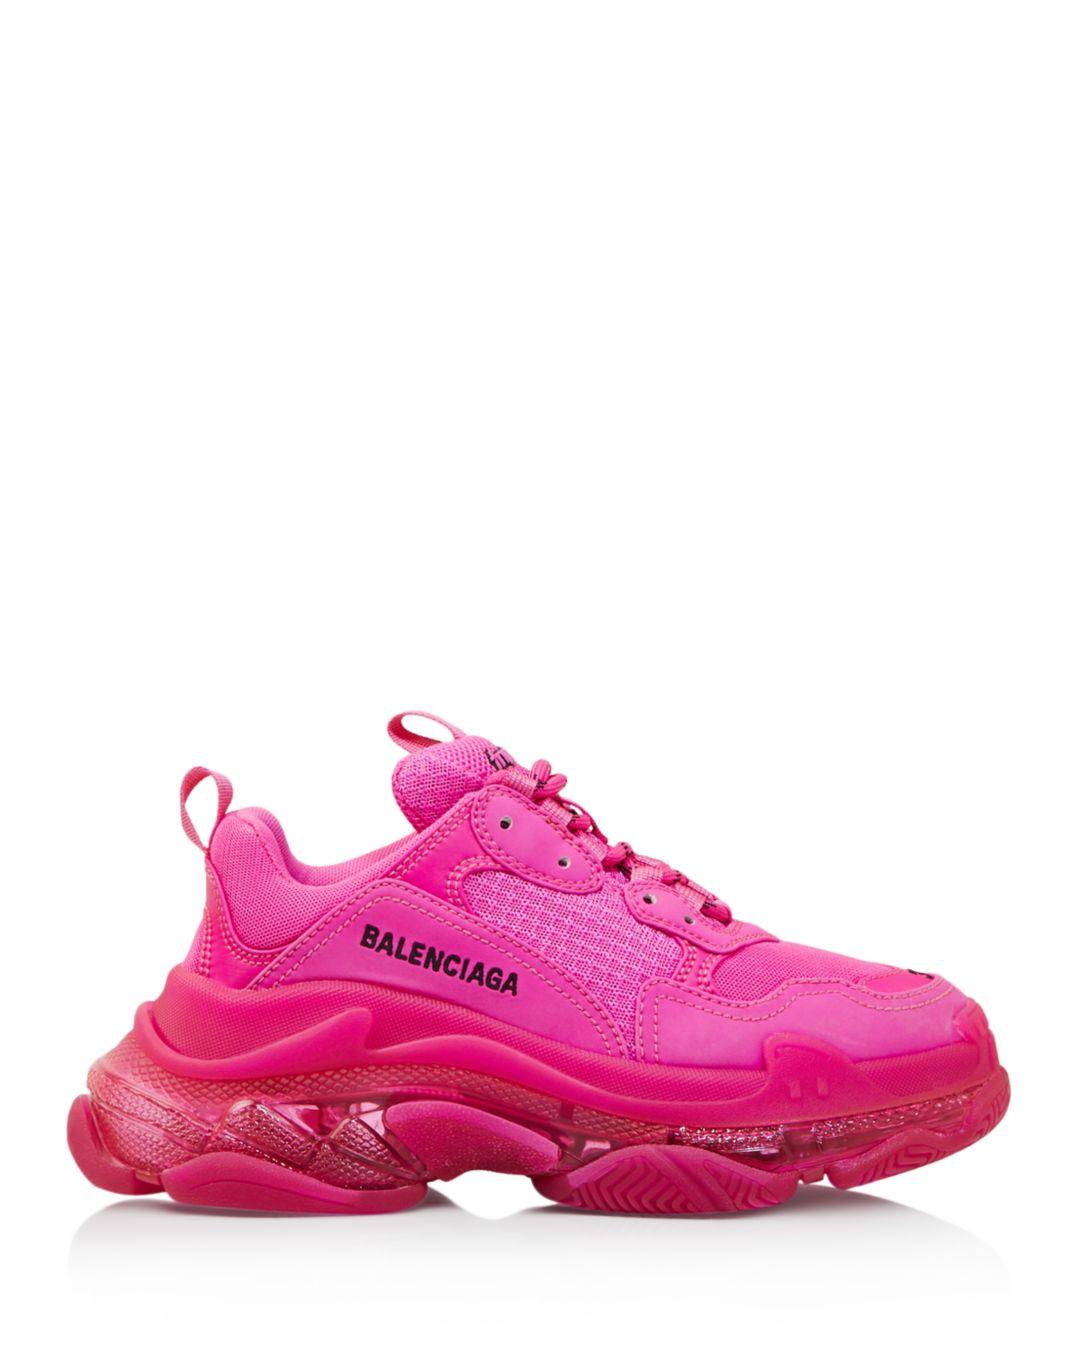 Balenciaga Triple S Sneaker in Pink - Save 60% | Lyst